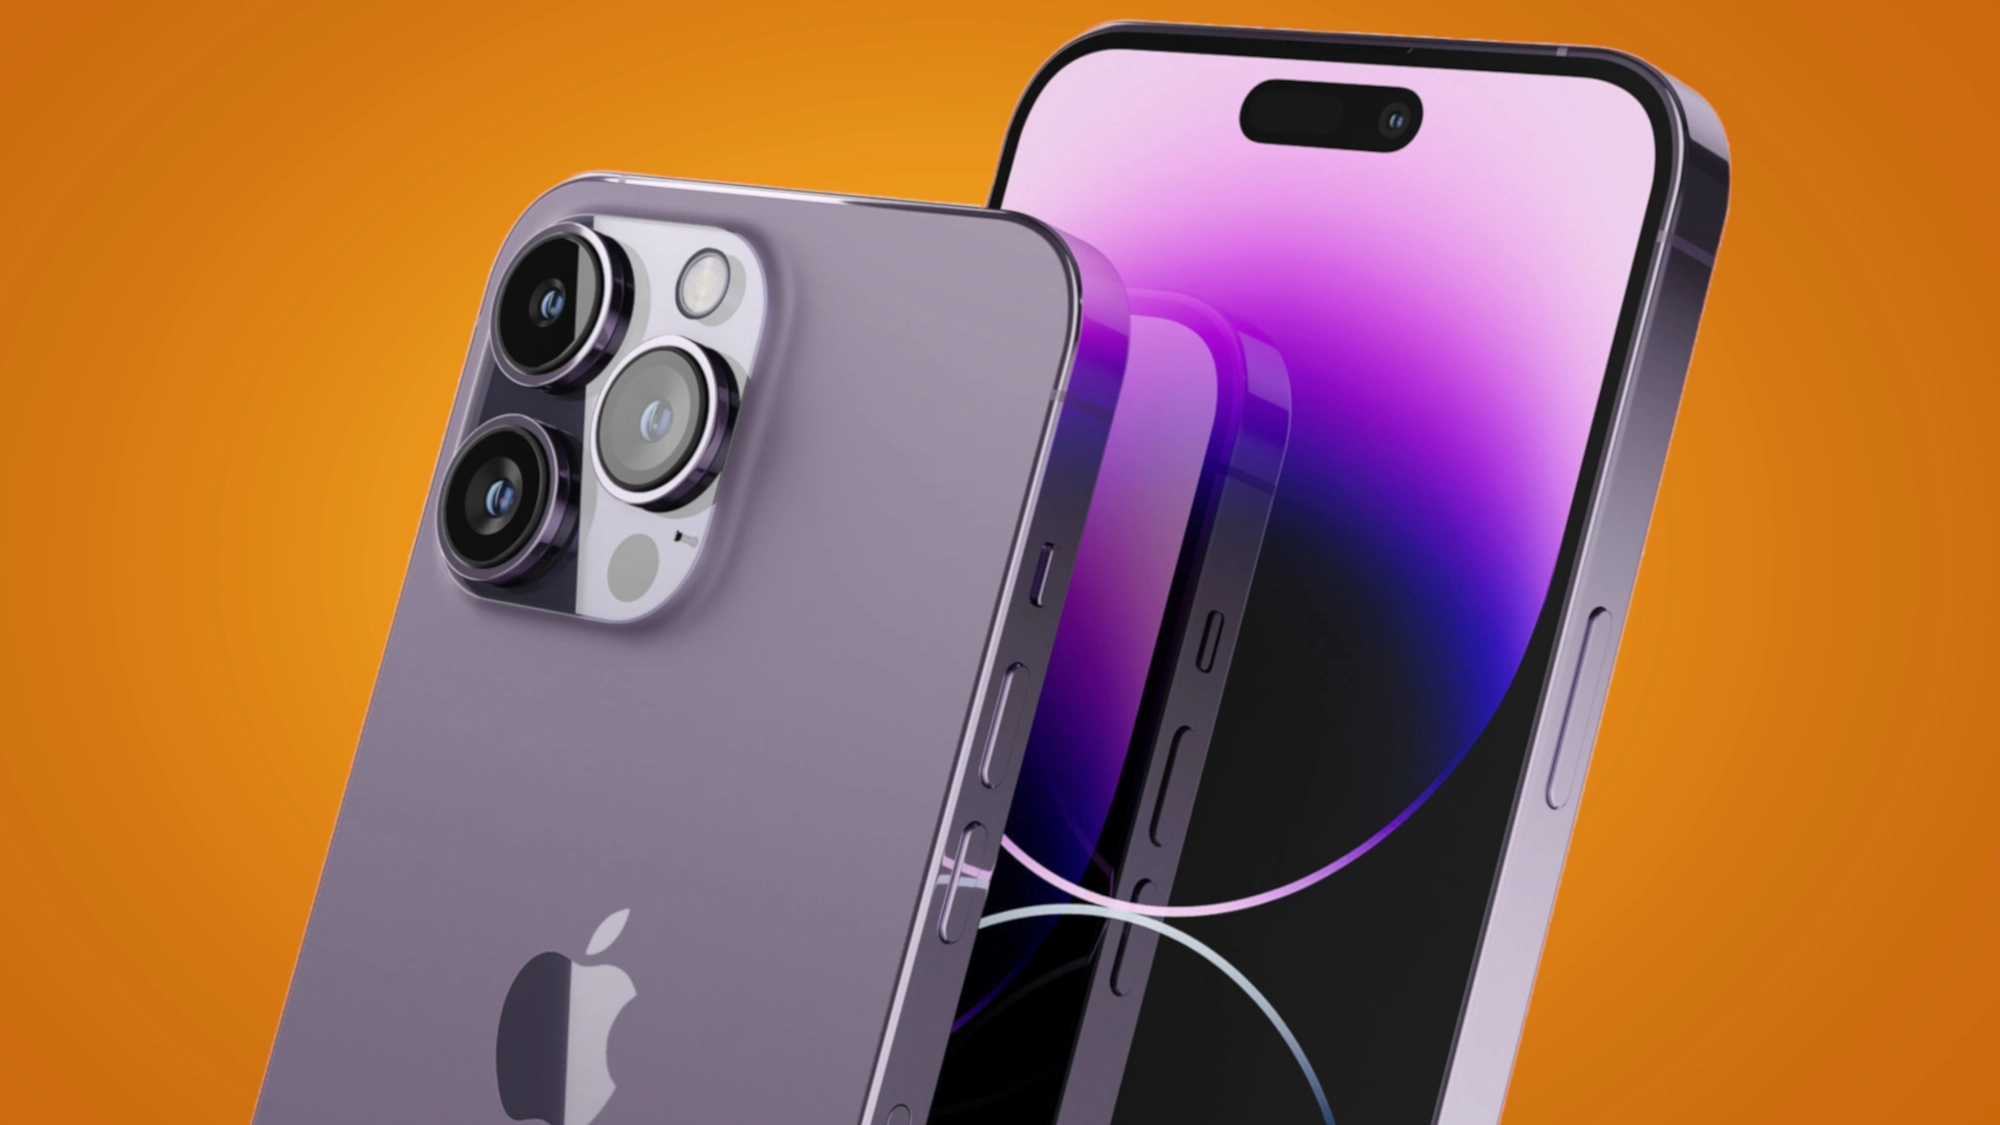 Rumors suggest iPhone 16 Pro will feature massive camera upgrades